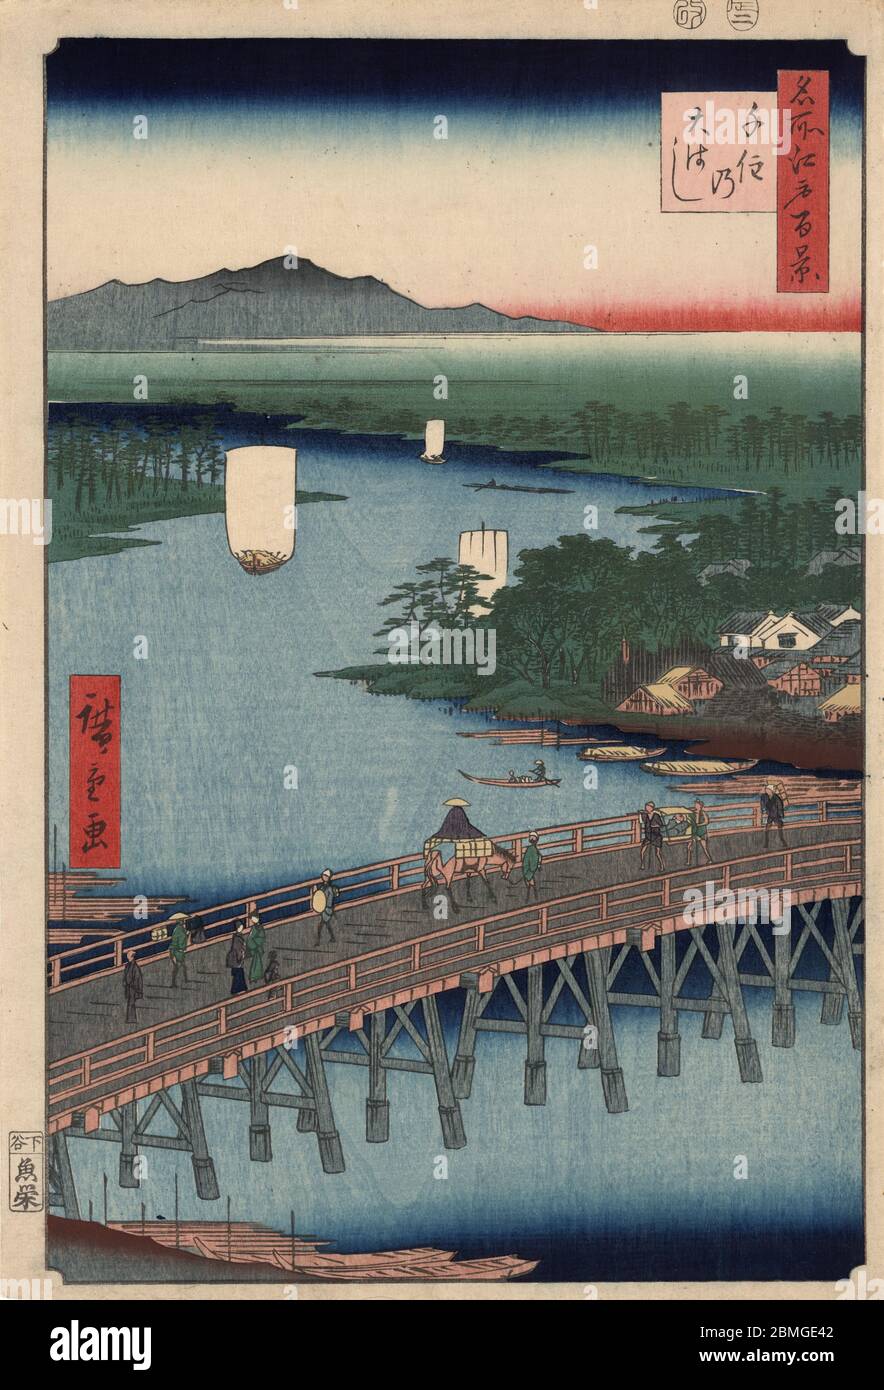 [ 1850s Japan - Arakawa River ] —   People crossing the Senju Ohashi Bridge across the Arakawa River in Edo (current Tokyo), 1856 (Ansei 3).  This woodblock print is image 103 in One Hundred Famous Views of Edo (名所江戸百景, Meisho Edo Hyakkei), a series created by ukiyoe artist Utagawa Hiroshige (歌川広重, 1797–1858).  It is one of 20 winter scenes in the series.  Title: Senju Ohashi (千住の大はし, Senju no ohashi)  19th century vintage Ukiyoe woodblock print. Stock Photo